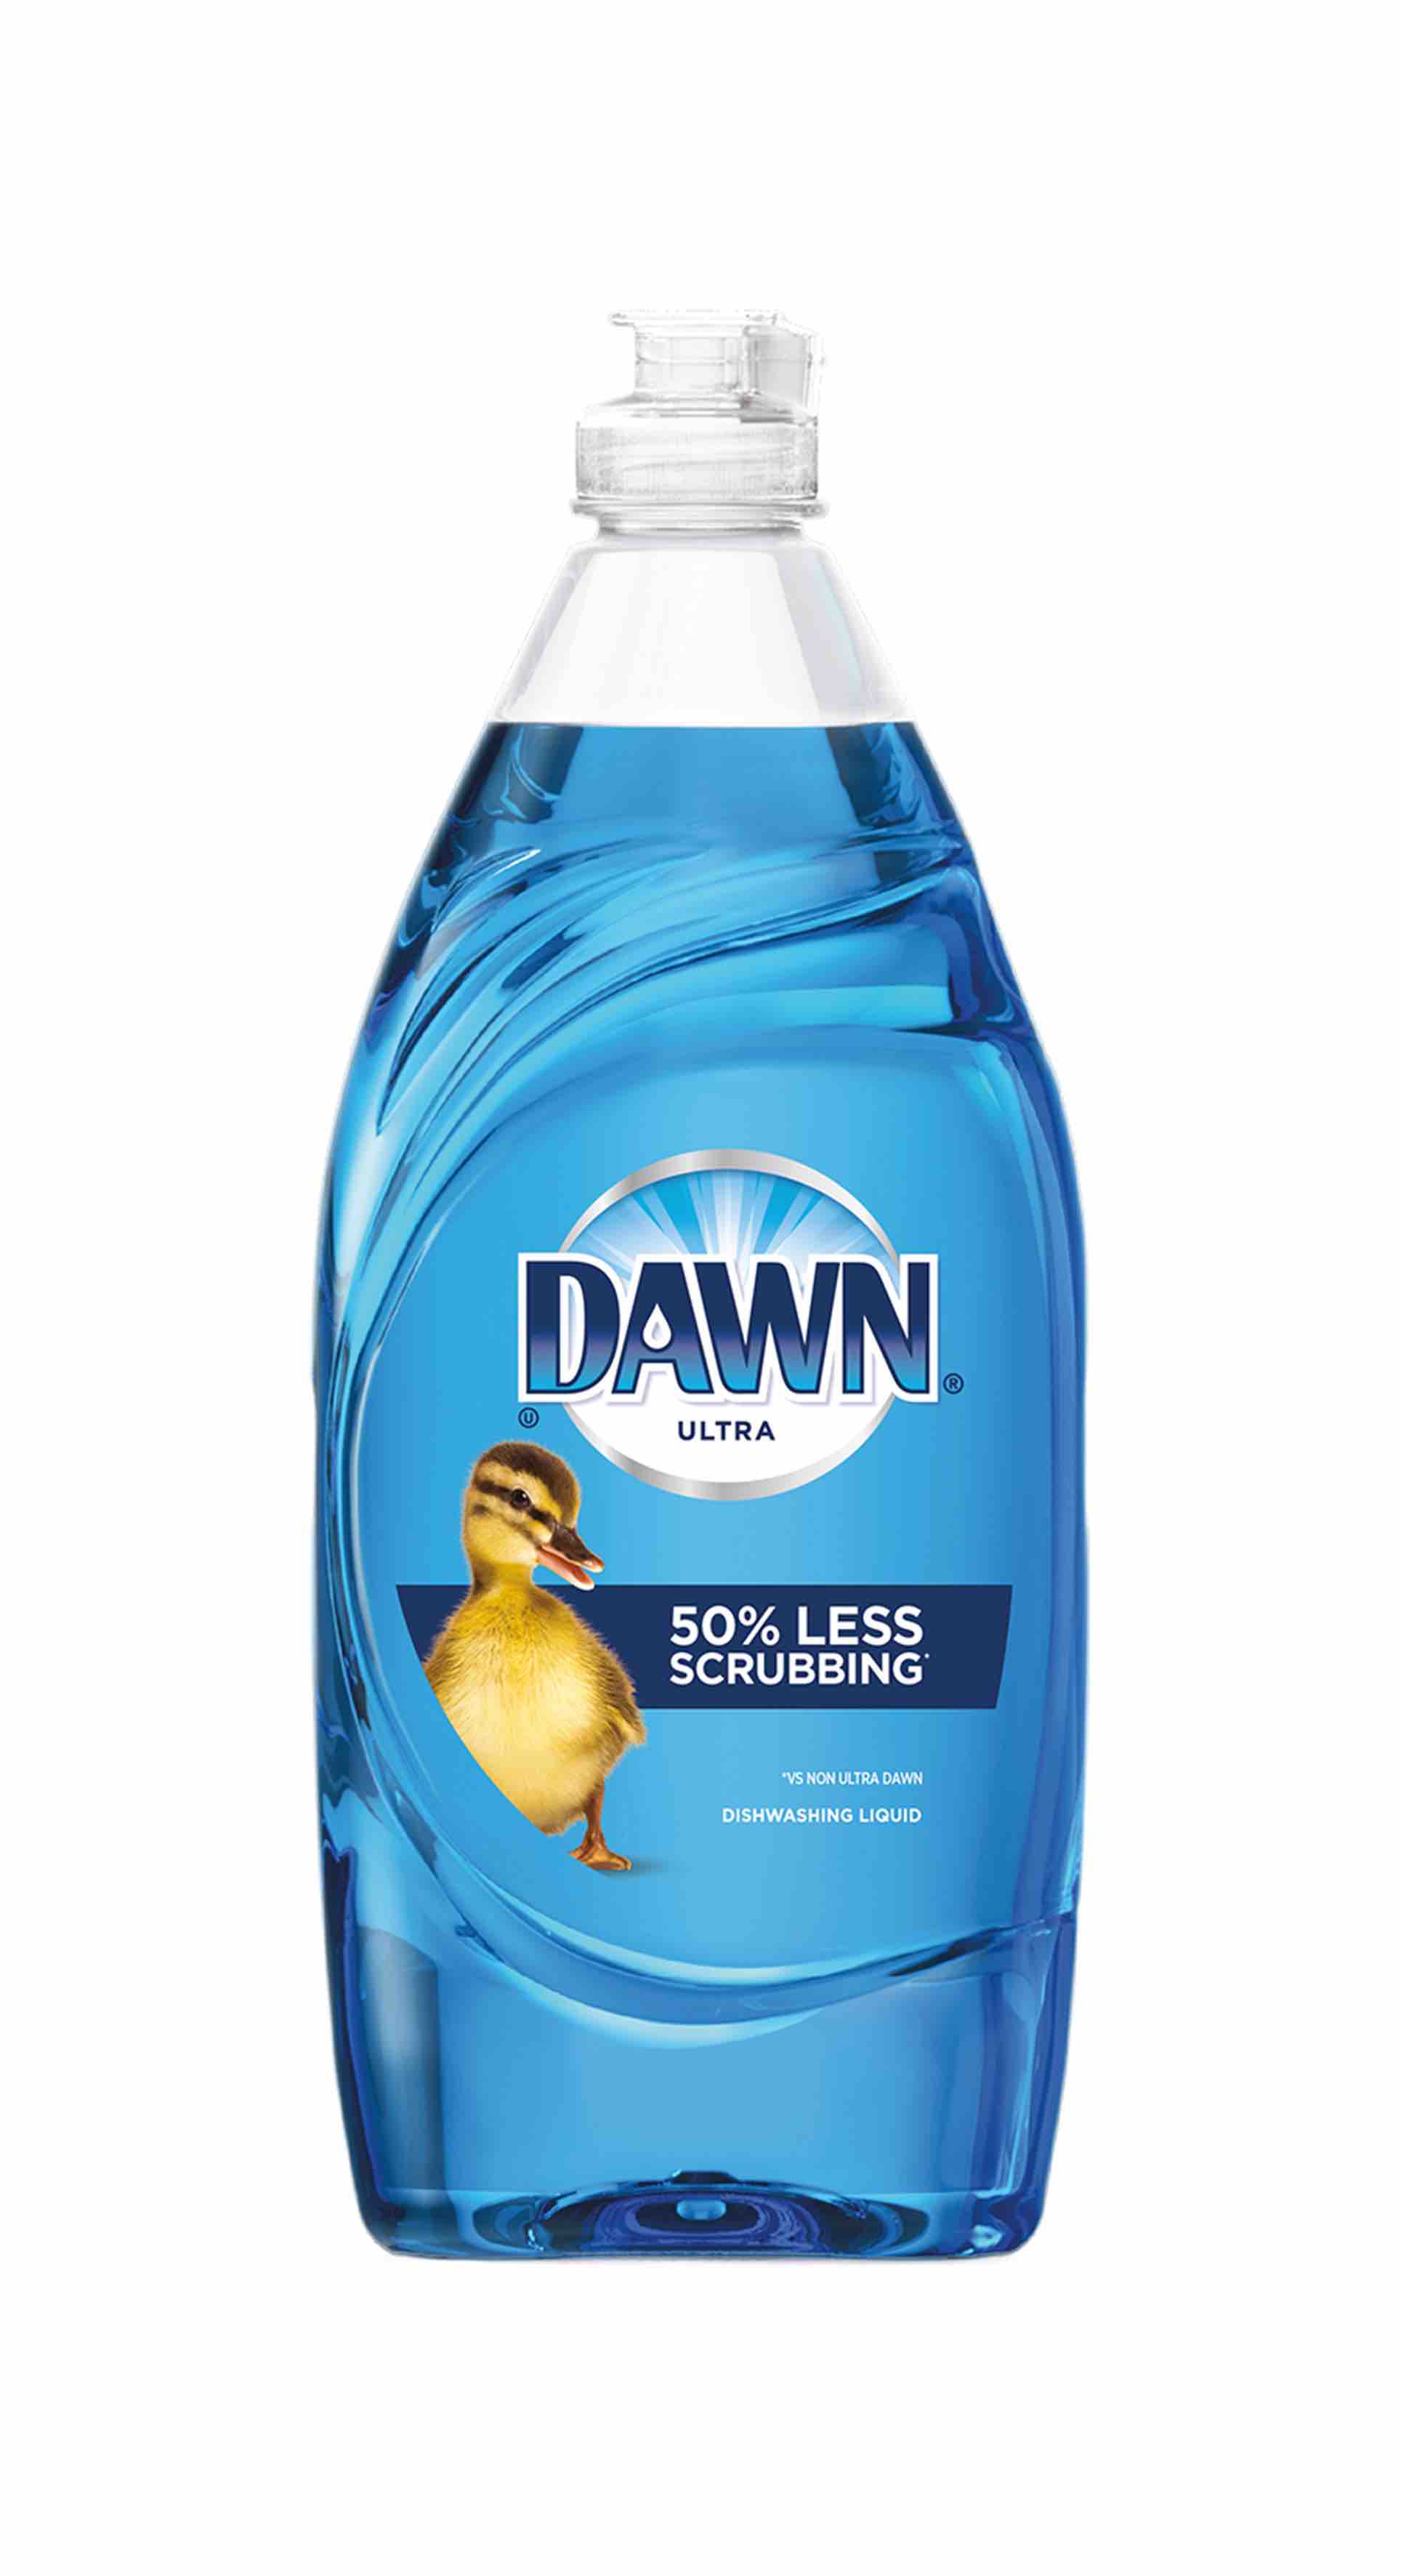 dawn oil spill animals